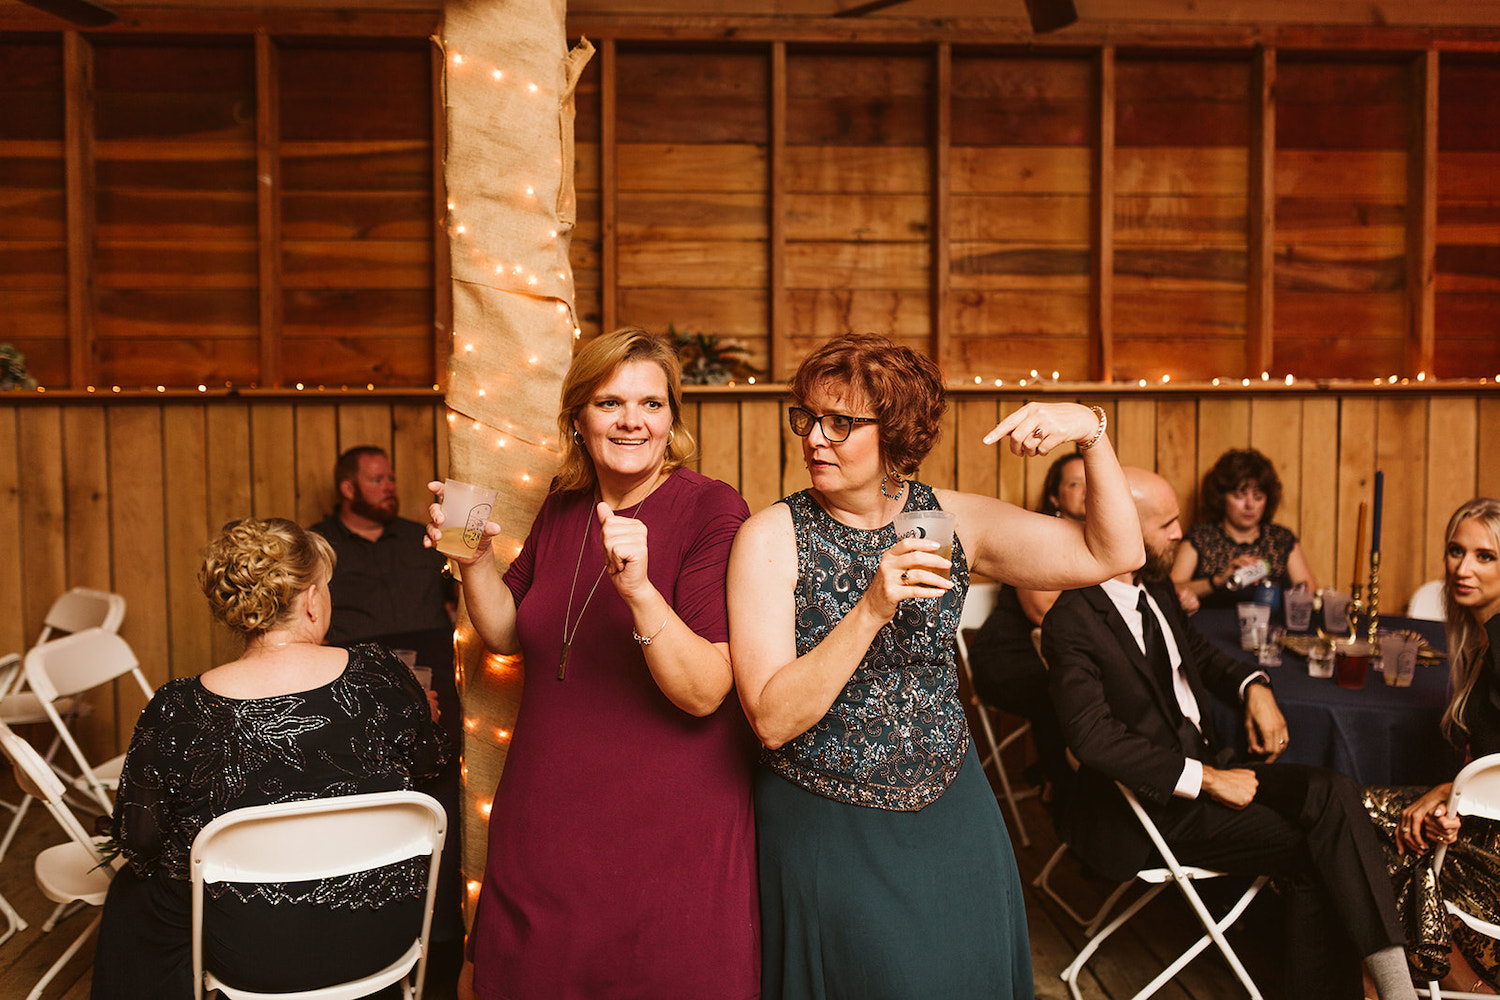 two women dance among wedding reception guests